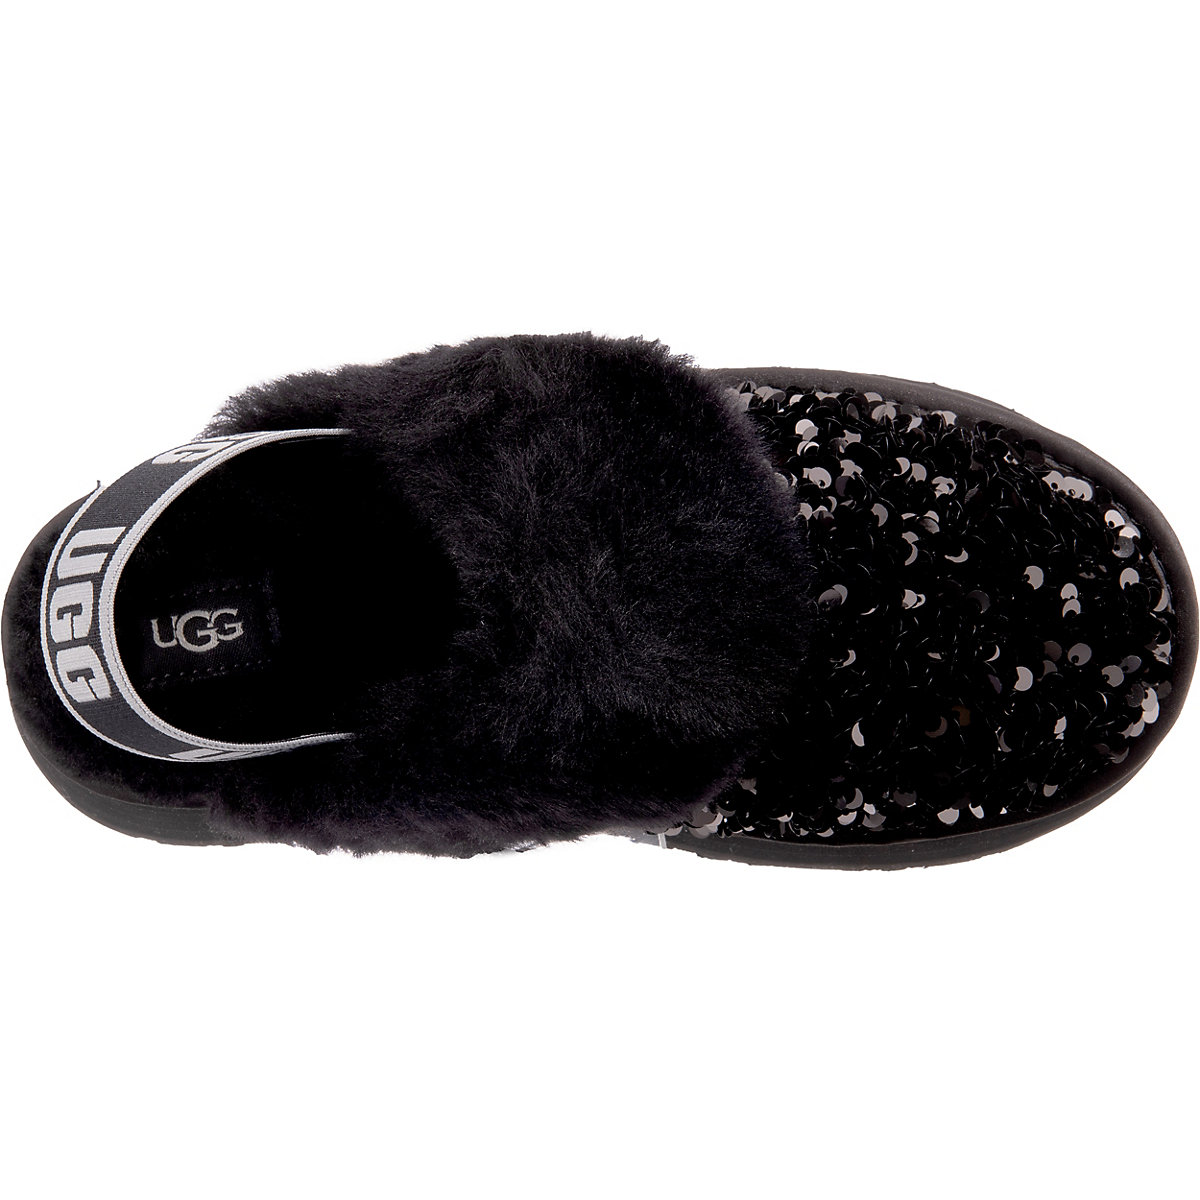 UGG W Funkette Chunky Sequin Pantoffeln schwarz UR7611